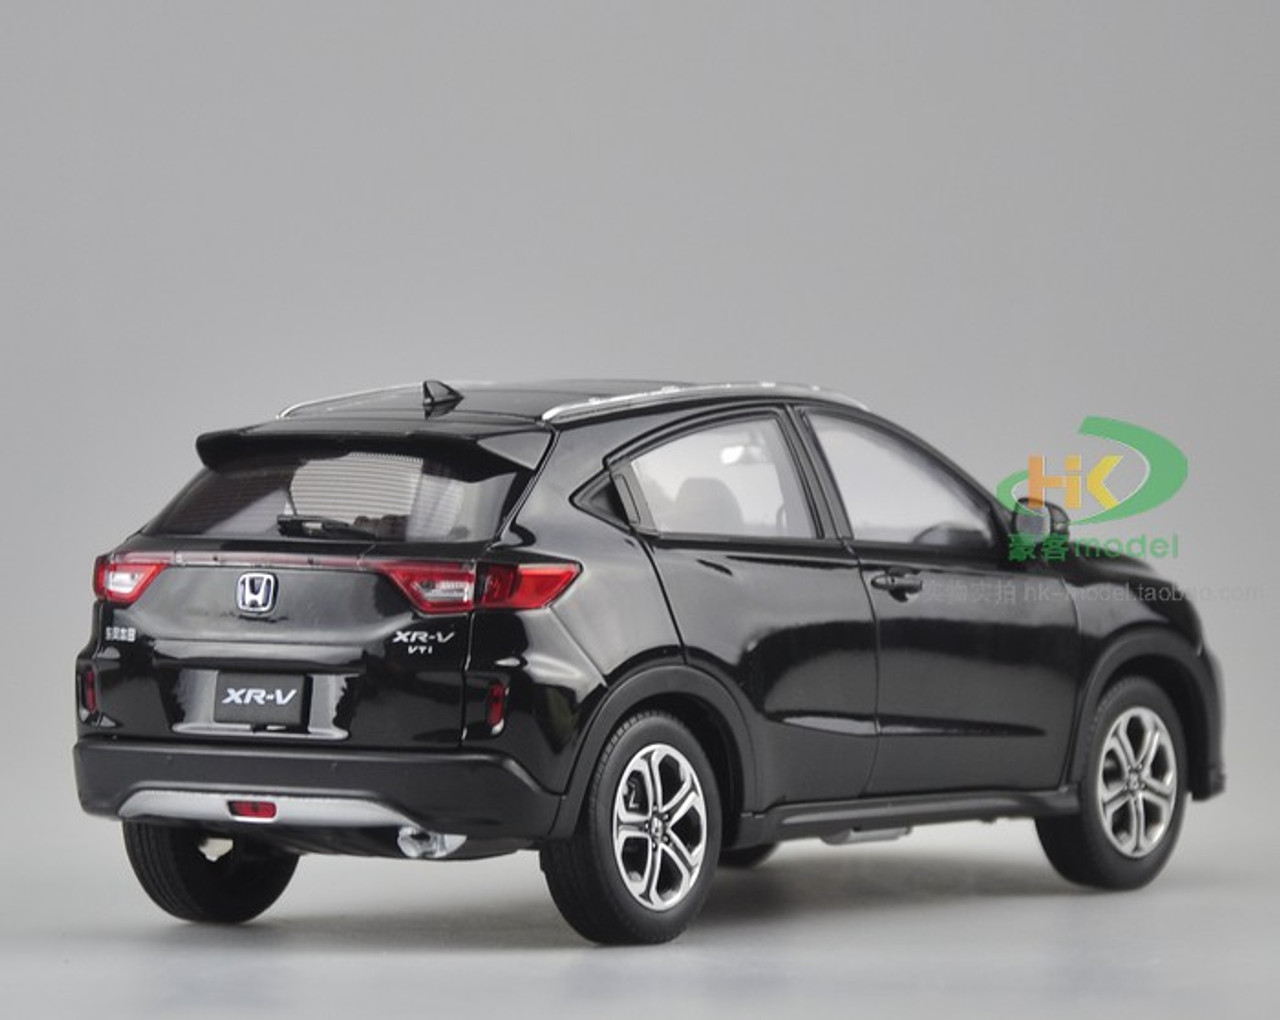 1/18 Dealer Edition Honda XR-V XRV (Black) Diecast Car Model